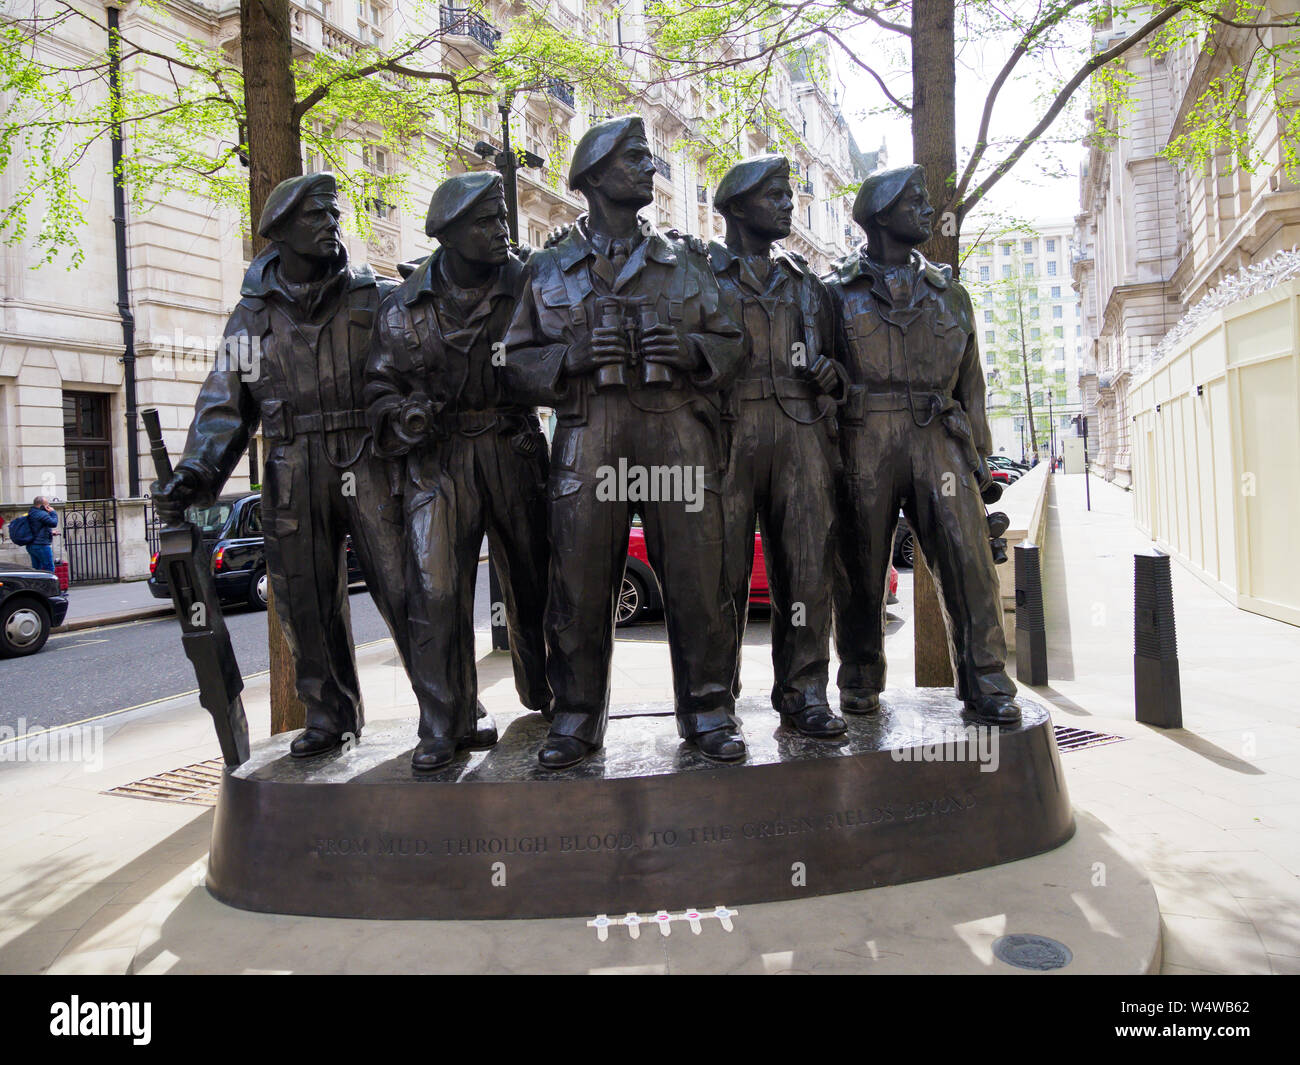 Royal Tank Regiment Memorial is a sculpture by Vivien Mallock in Whitehall Court, London. It commemorates the Royal Tank Regiment. Stock Photo